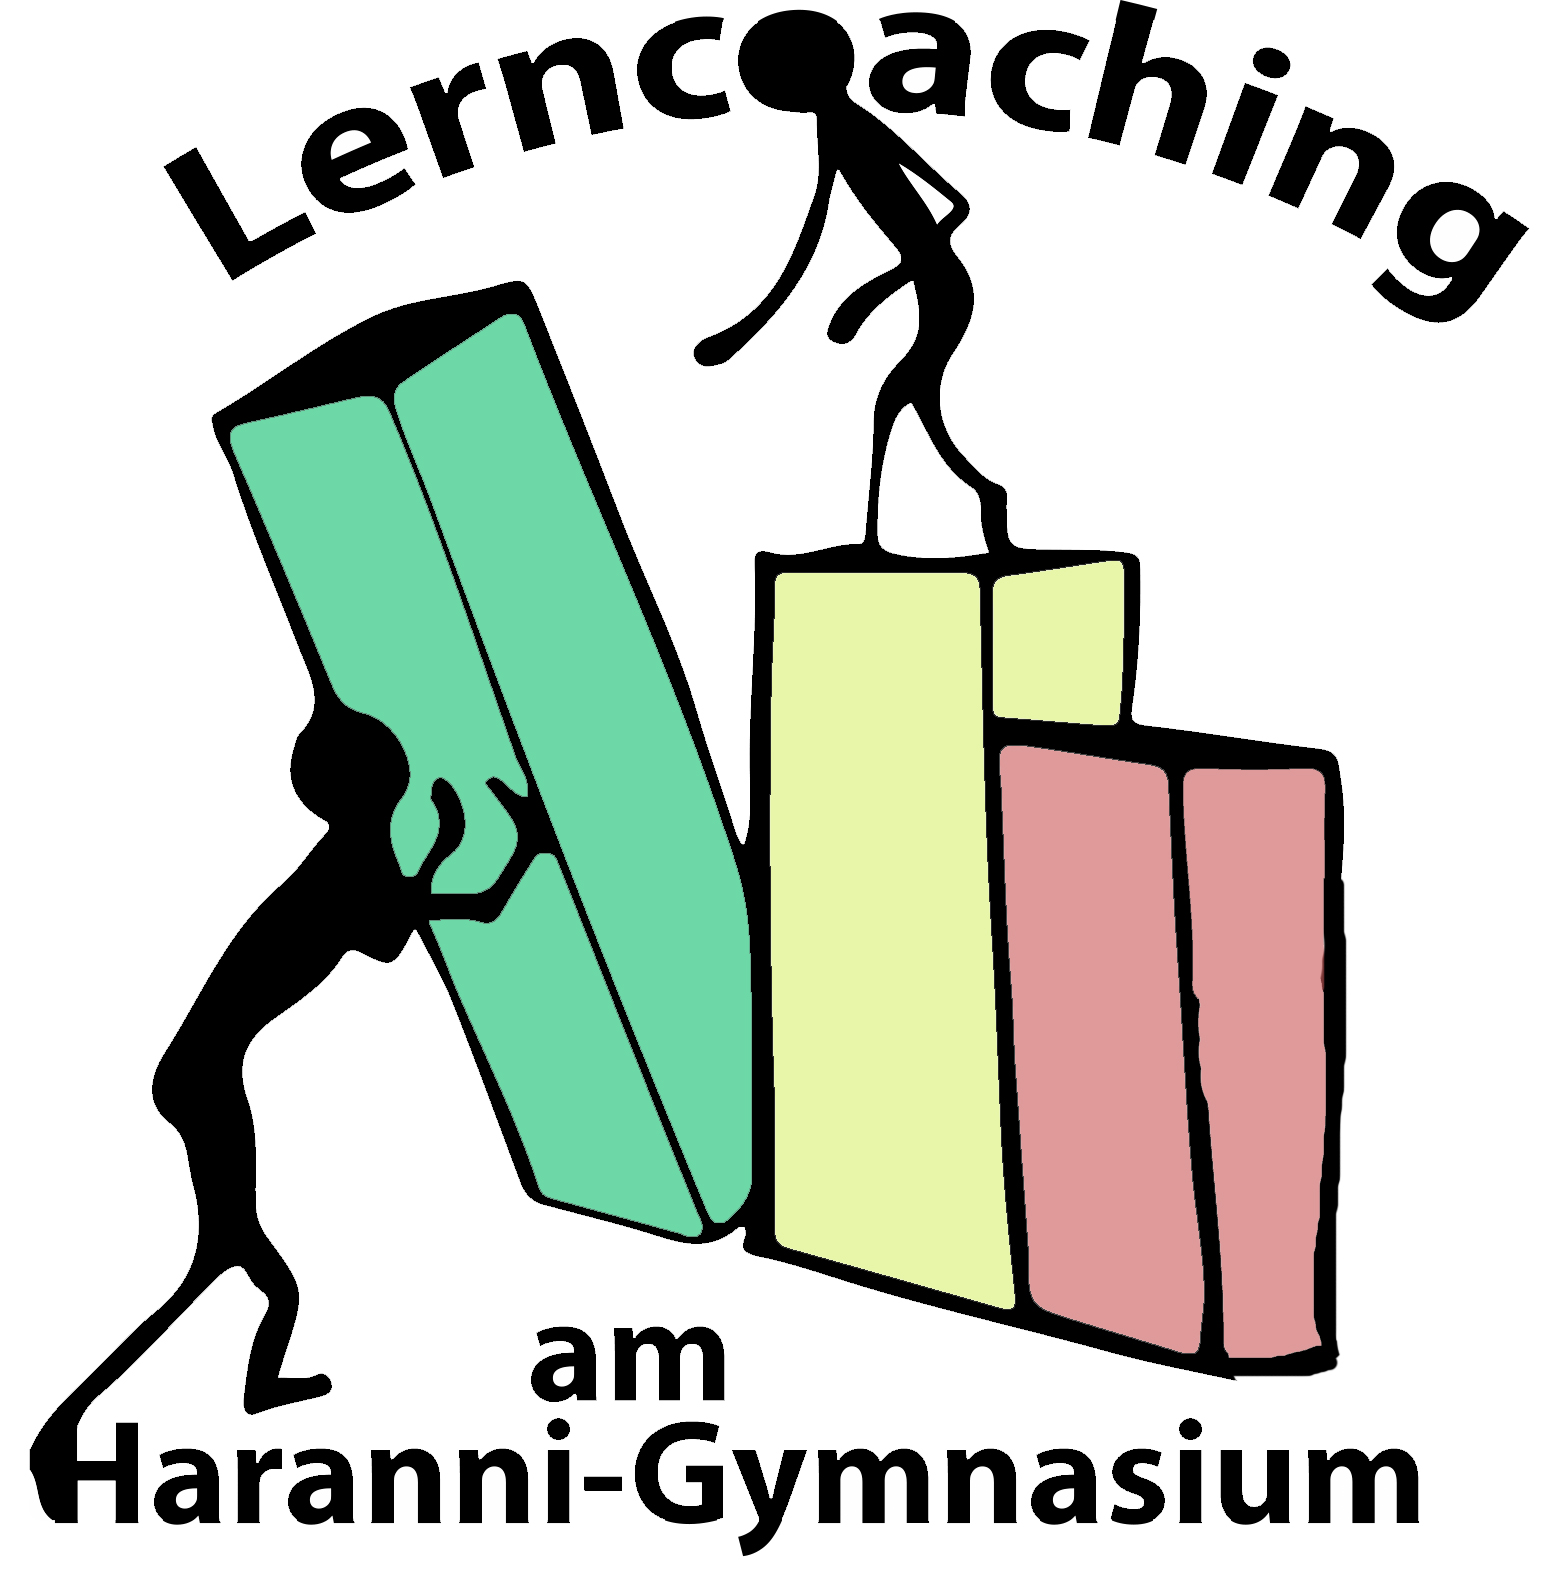 coaching logo erweitert